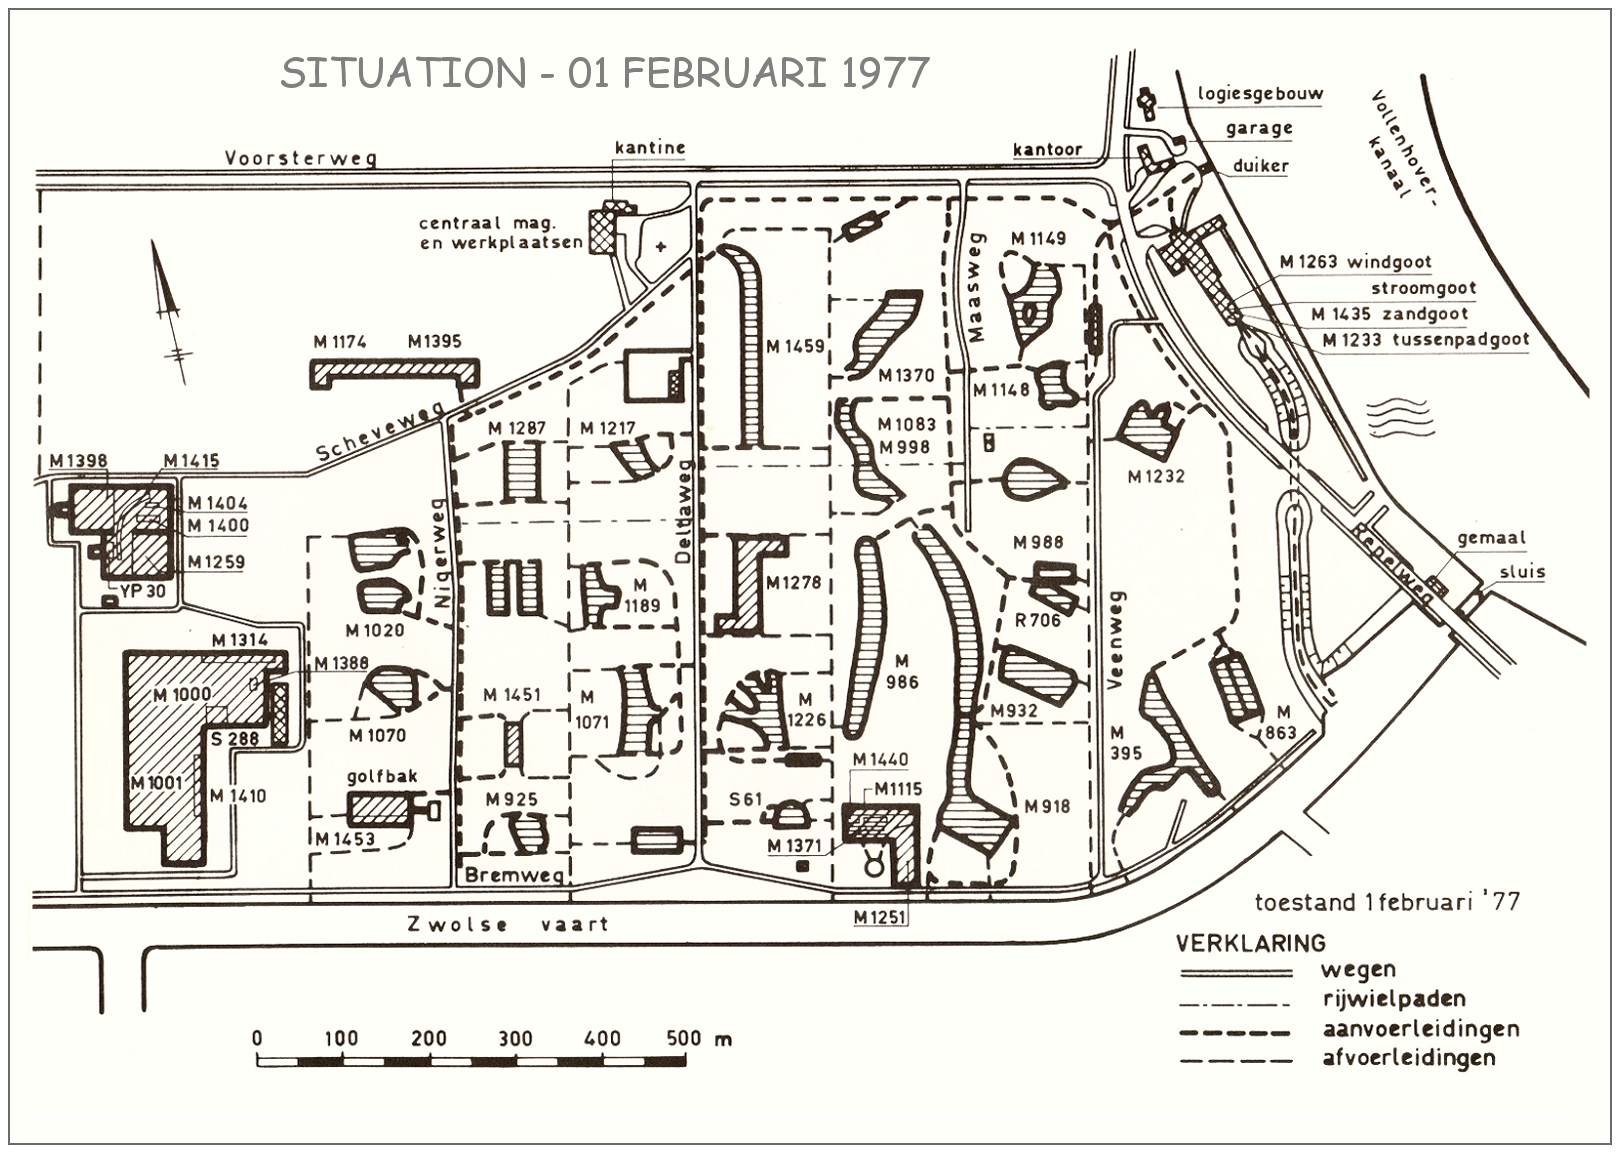 Terrain - Terrein Waterloopkundig Laboratorium - Modelplaatsen - situation 01 Feb 1977